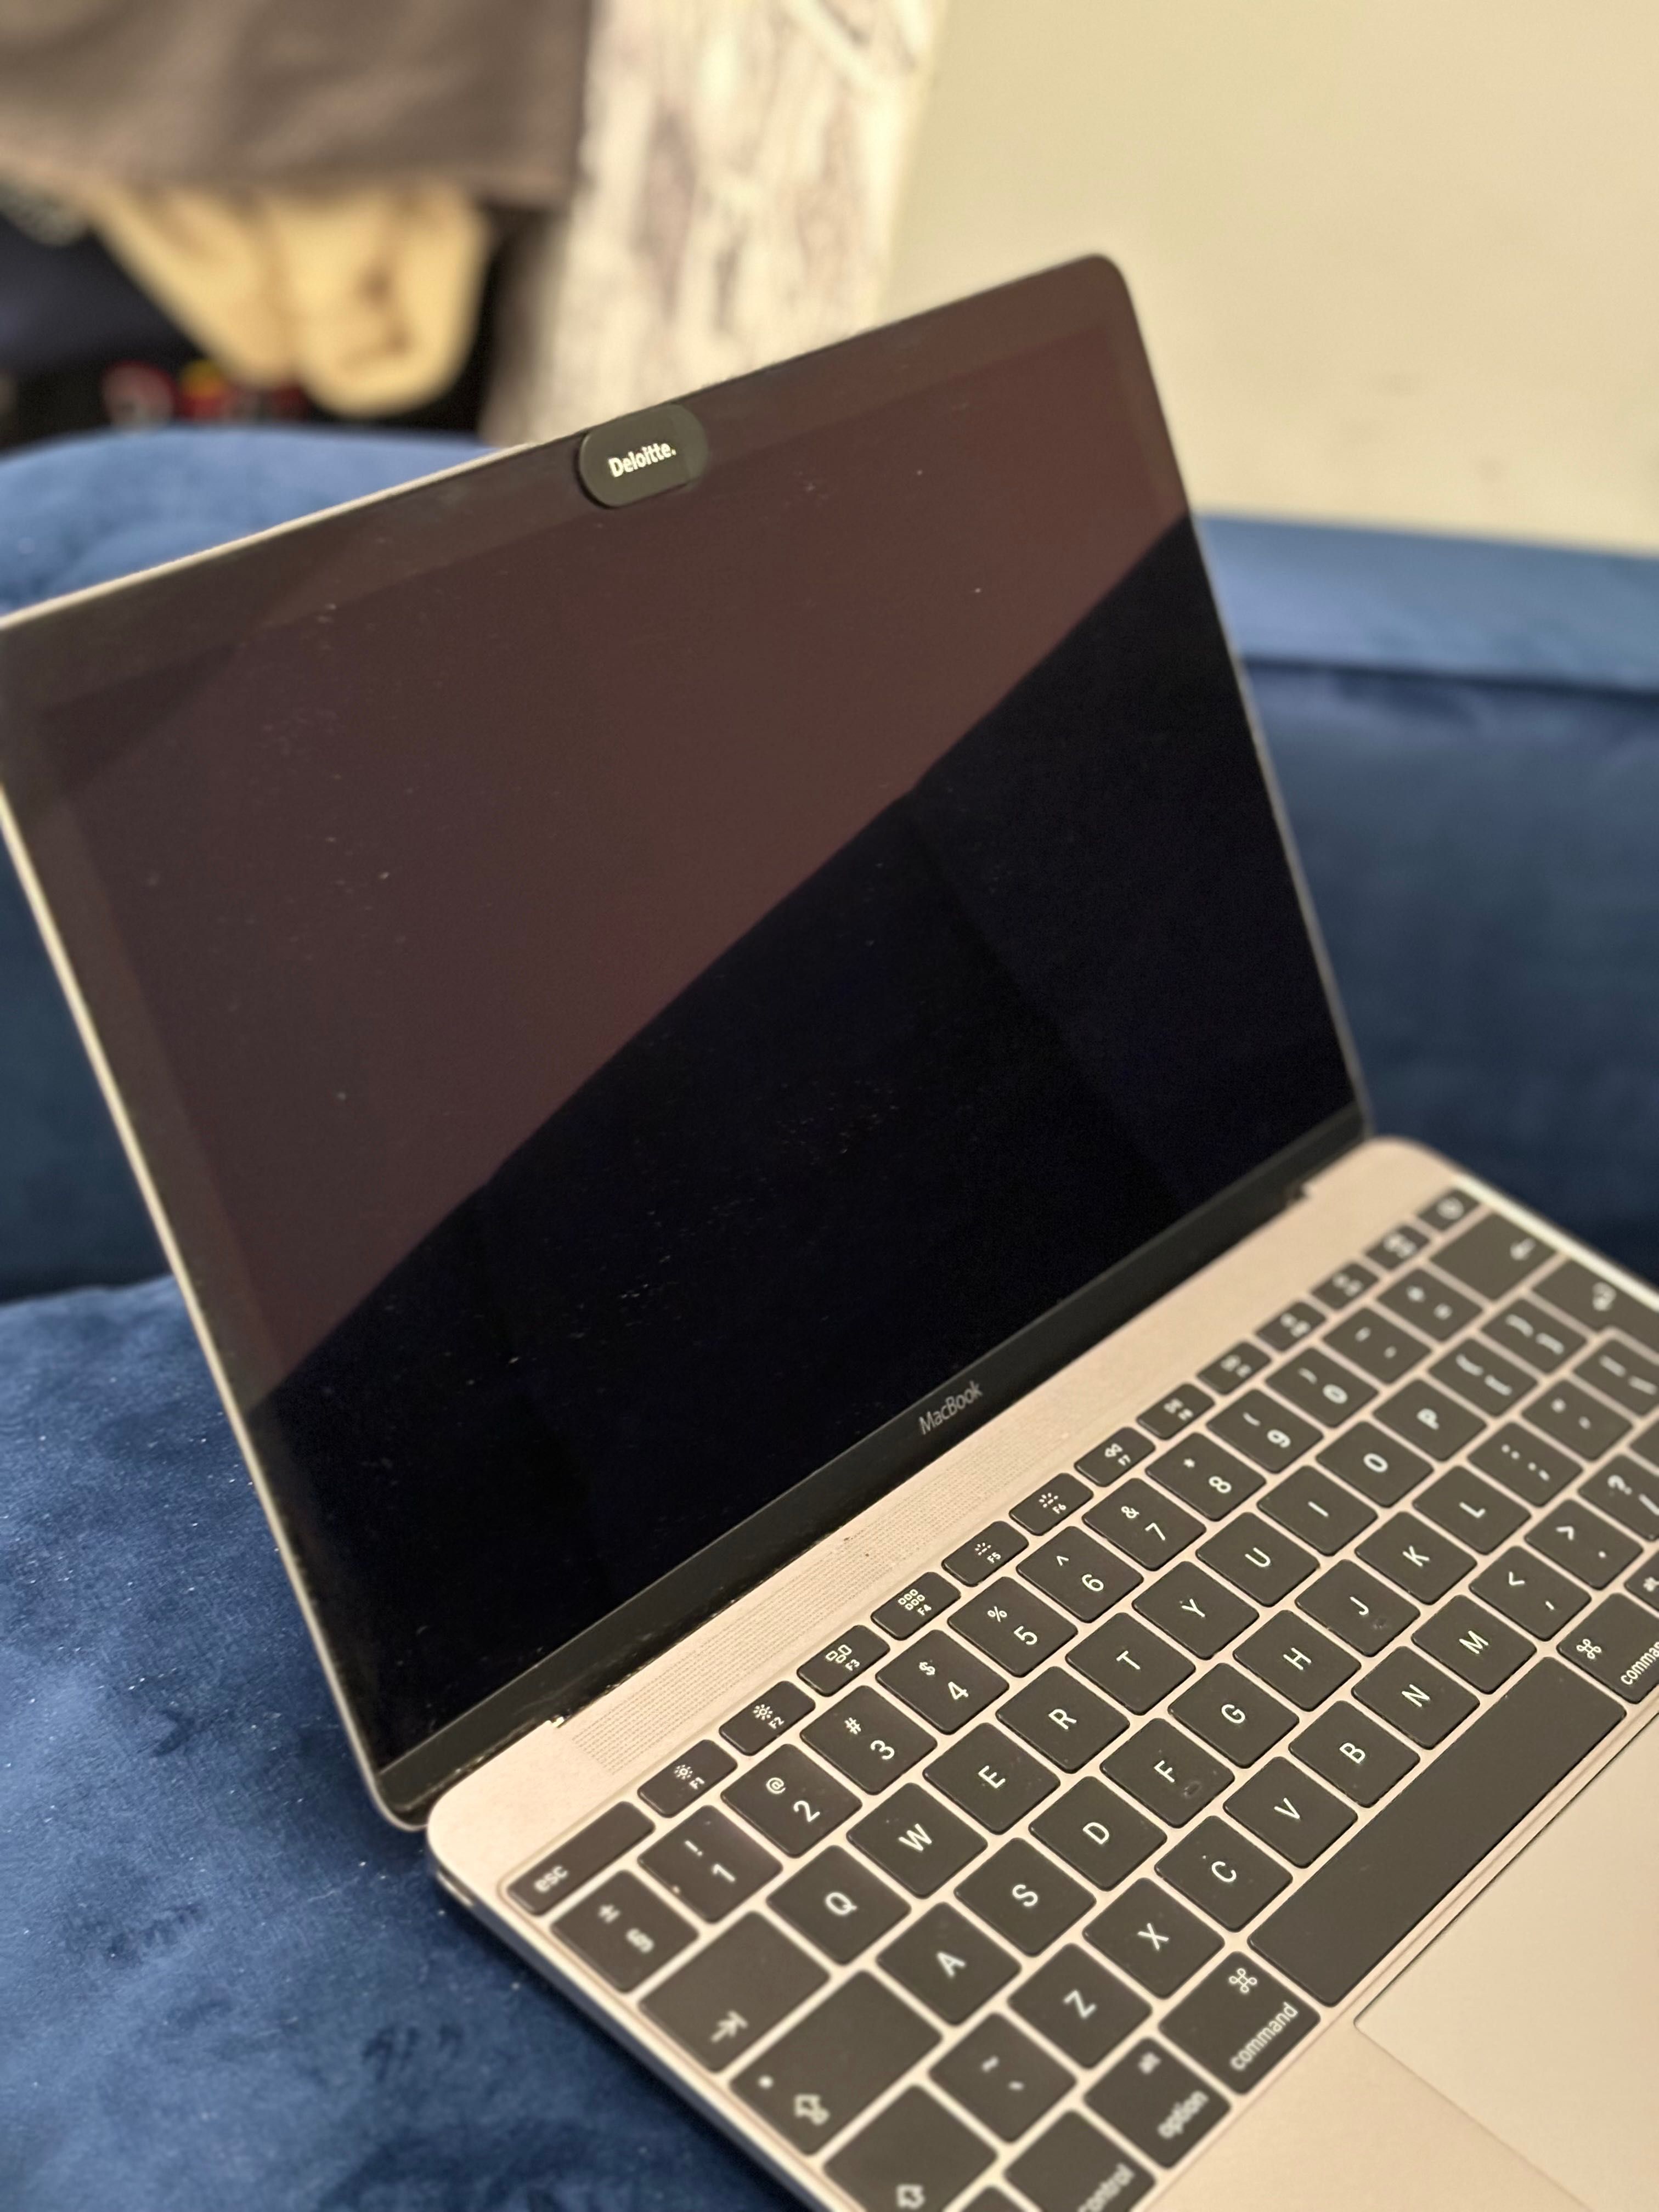 MacBook Retina 12-inch Early 2016